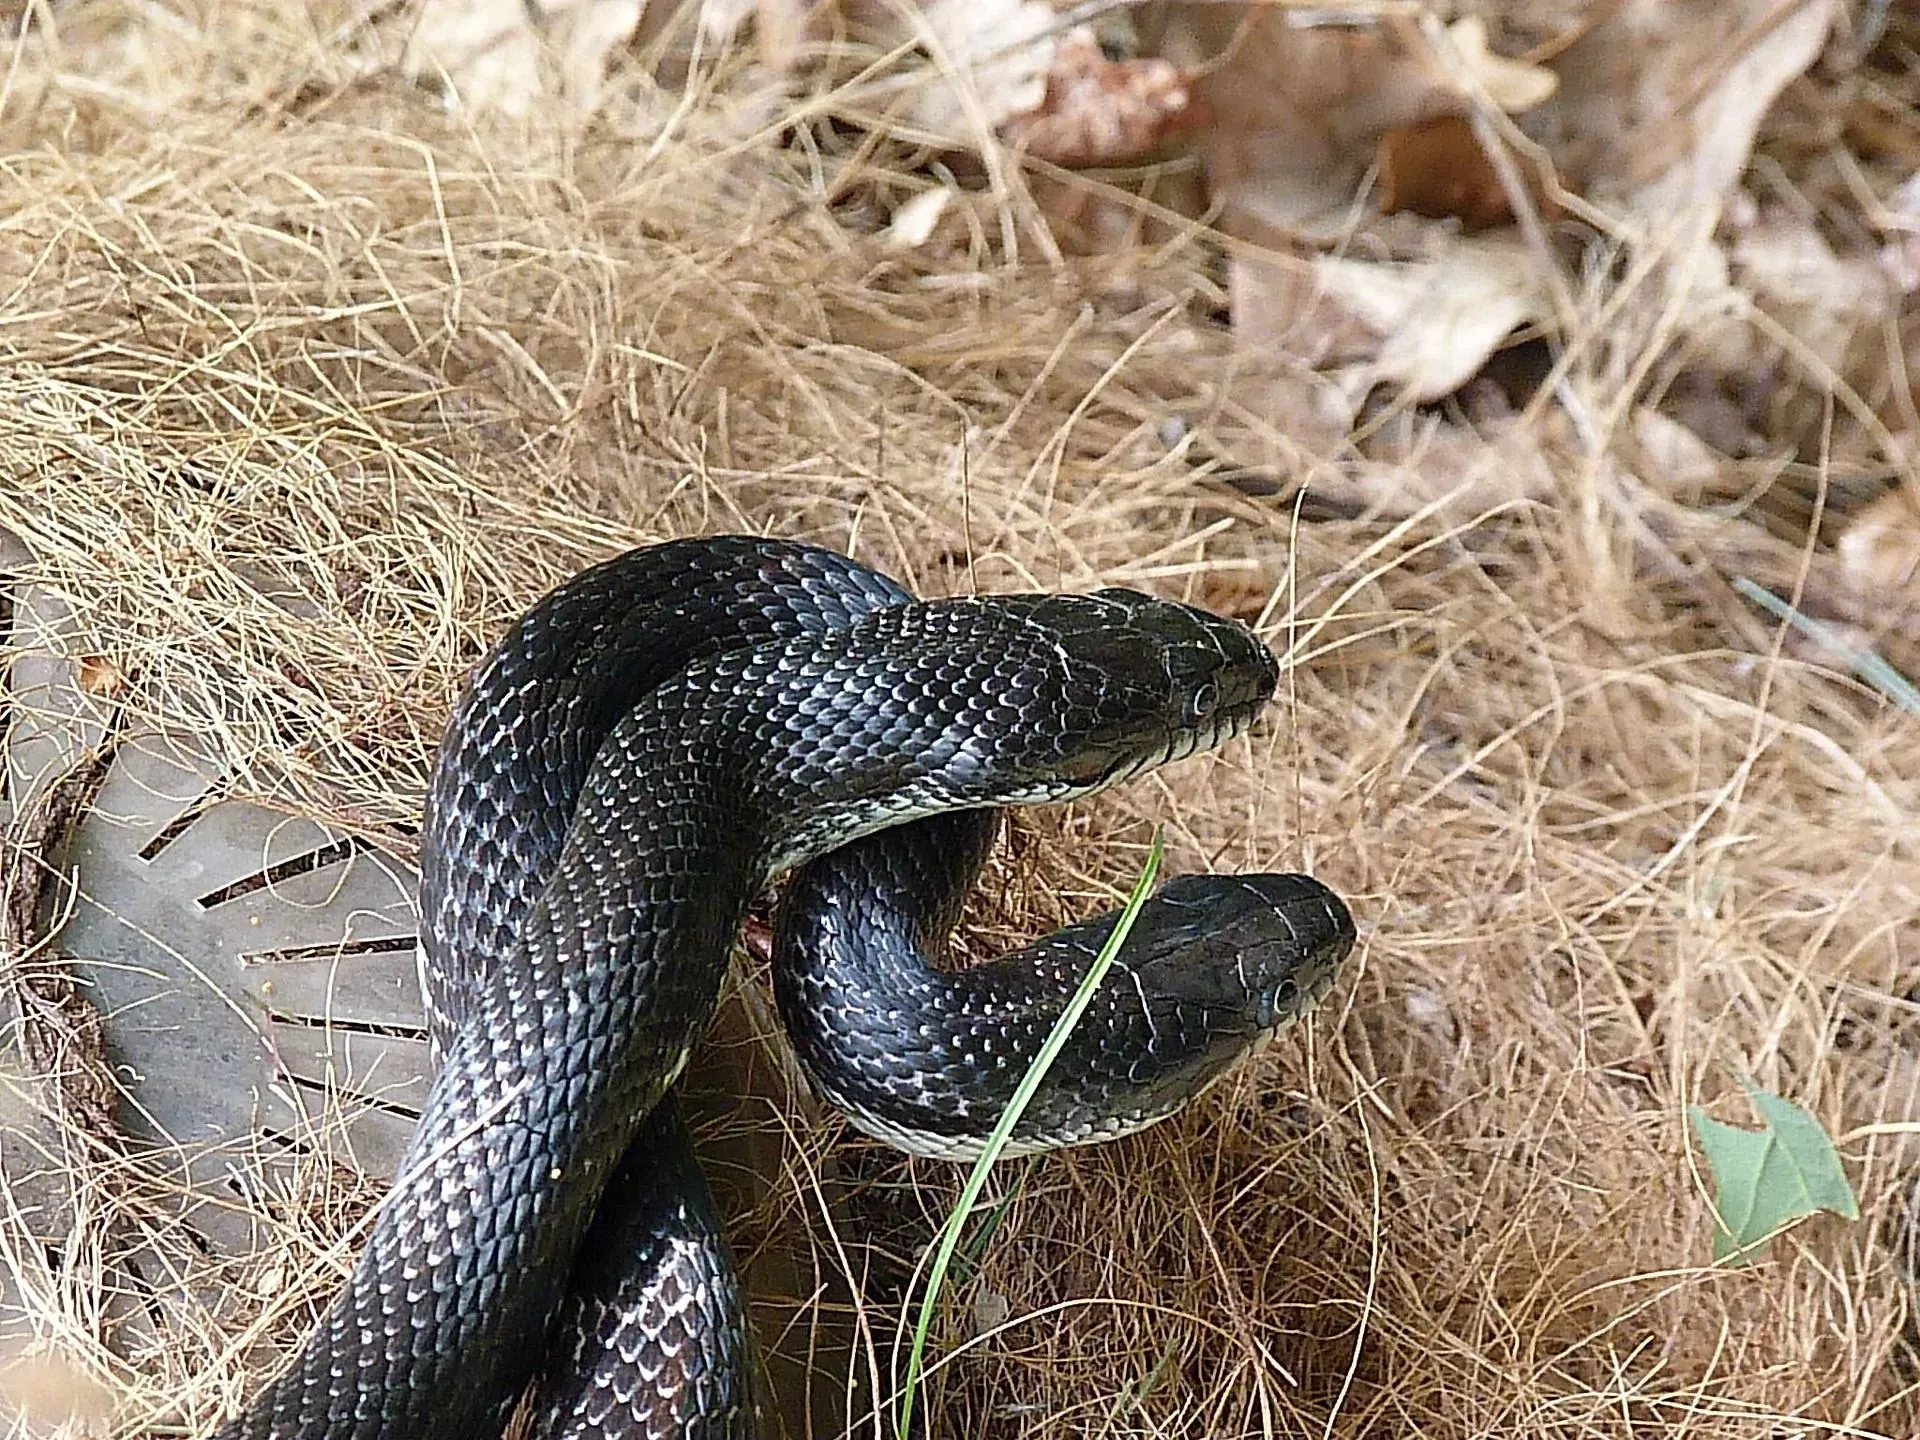 Many adventurers often wonder 'are black snakes poisonous'.